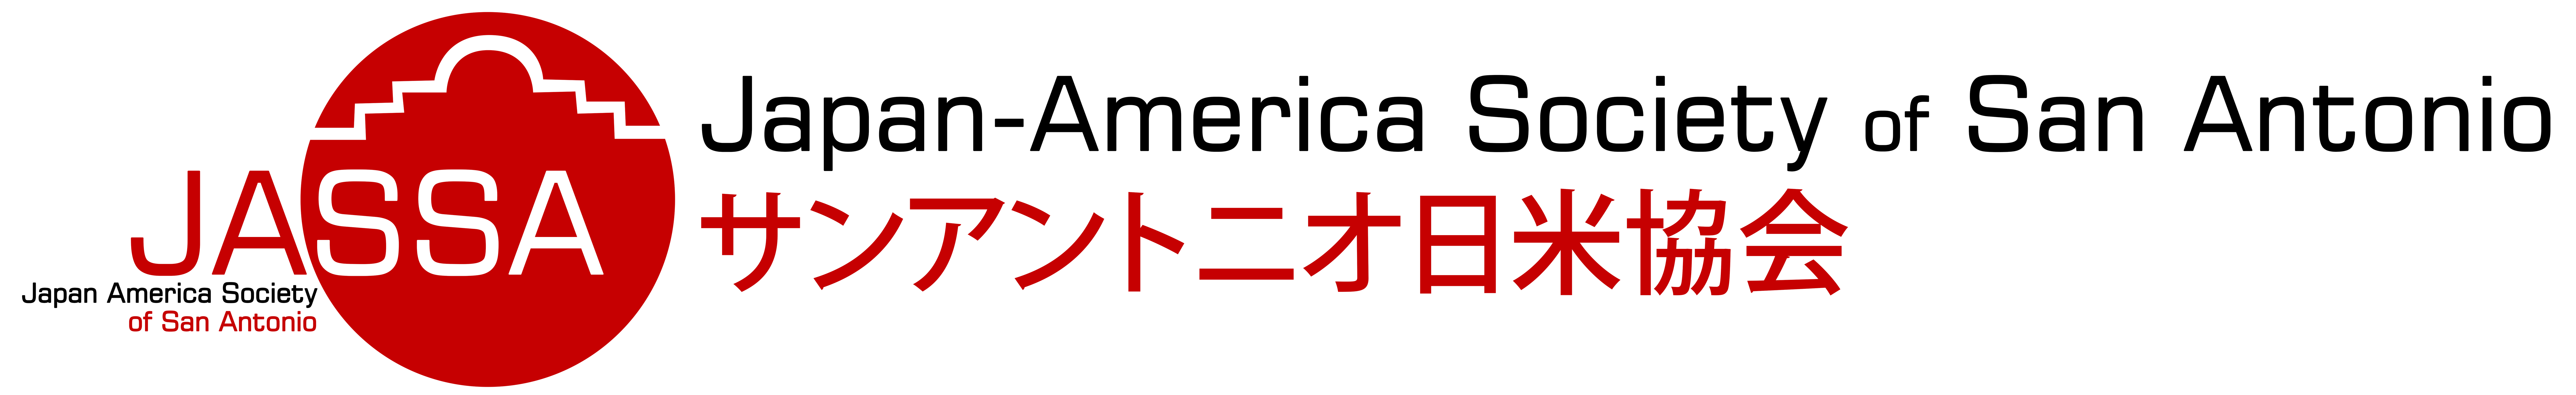 Japan-America Society of San Antonio [JASSA]